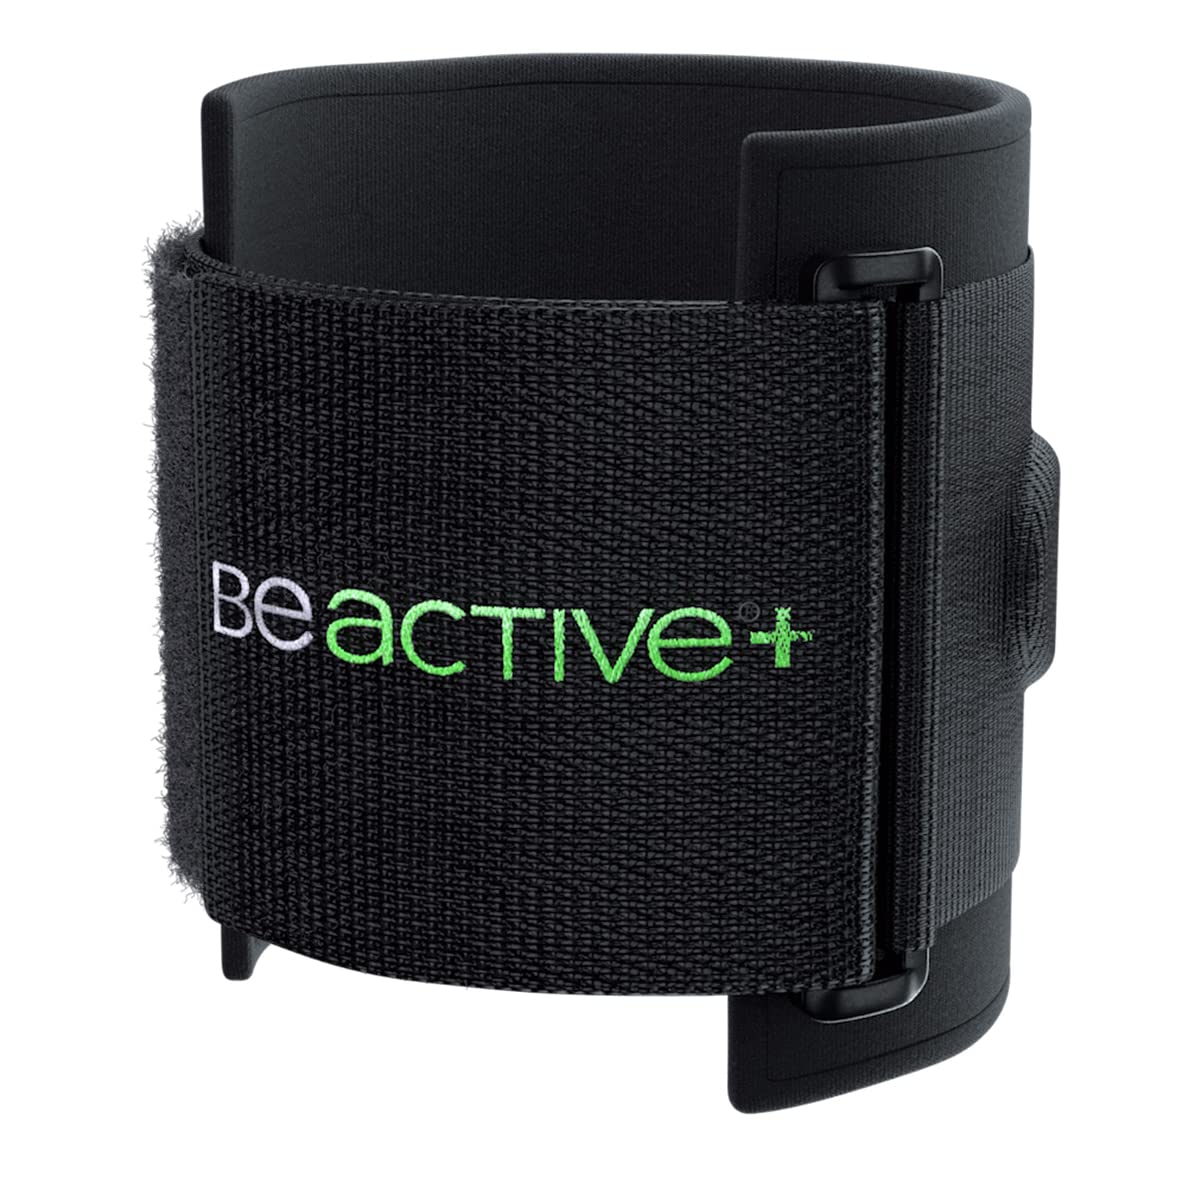 BeActive Plus Acupressure Brace Review